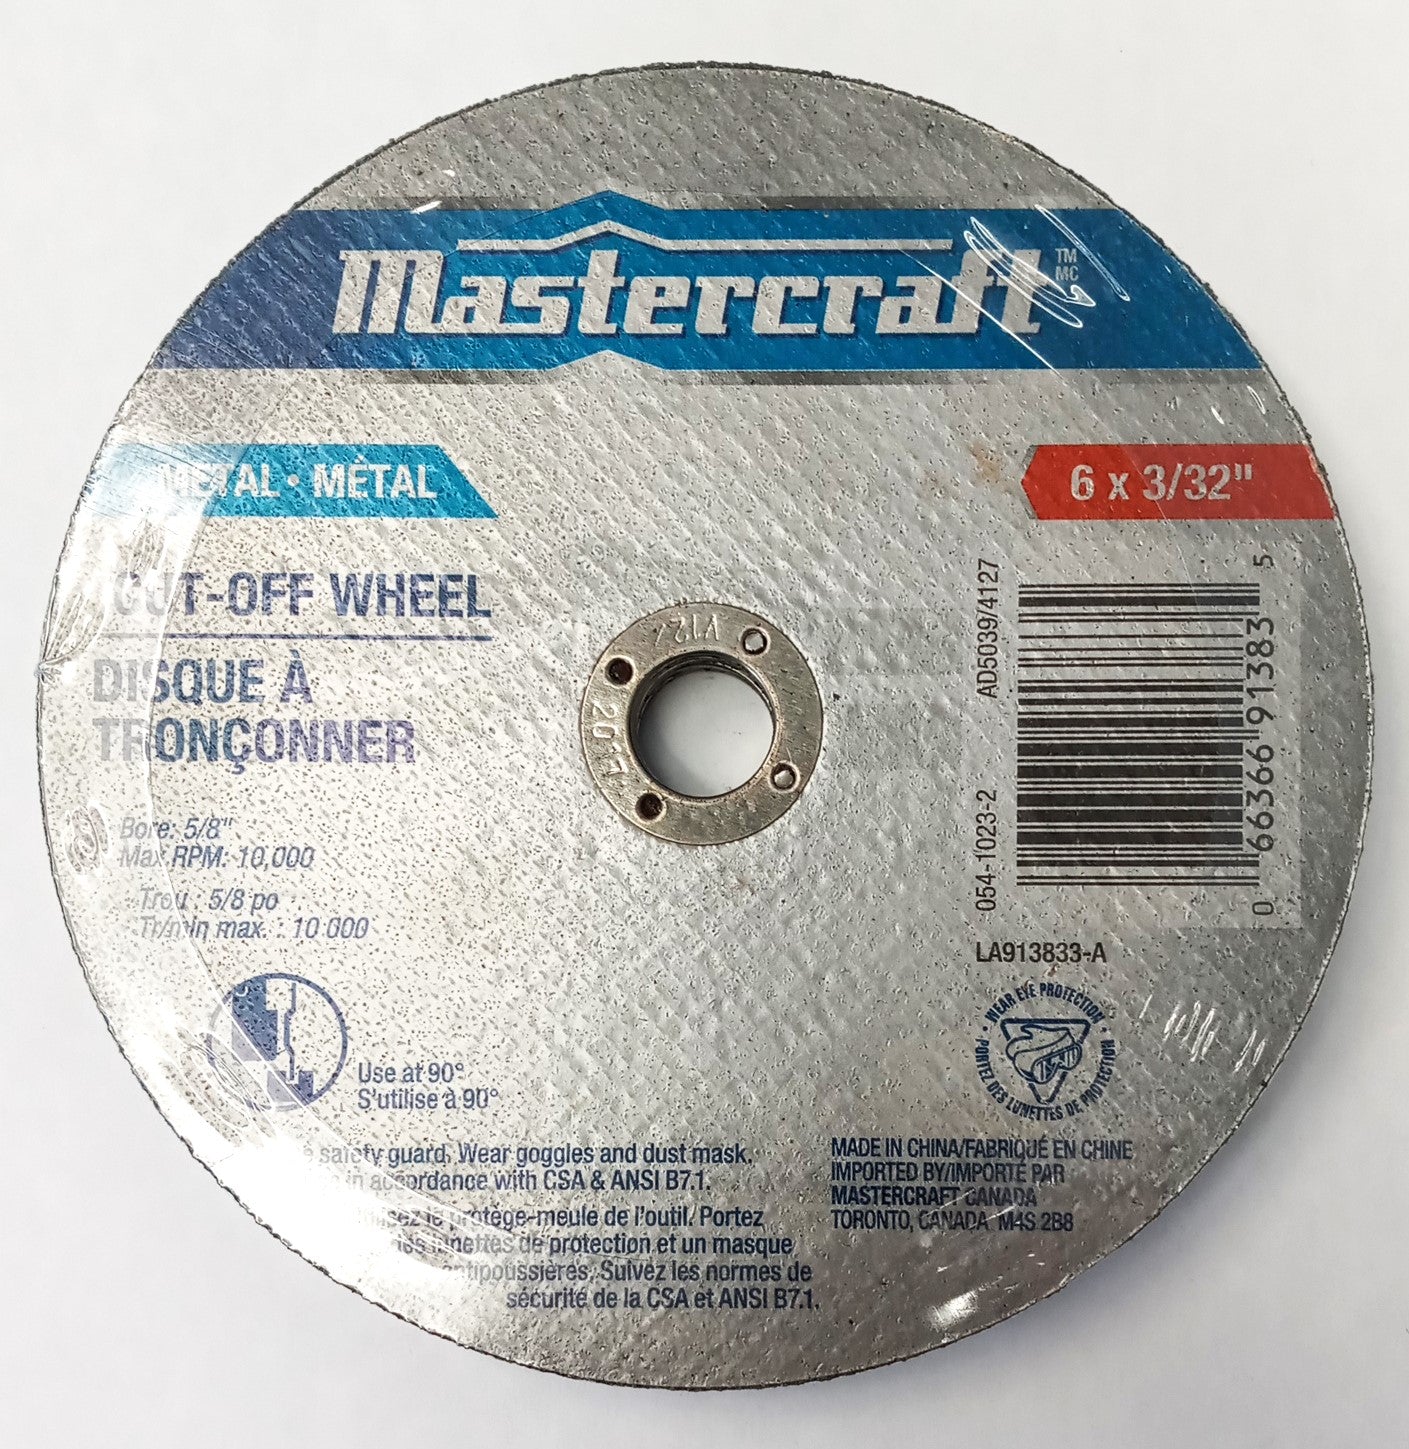 Mastercraft 913833 6" x 3/32" Metal Cut Off Wheel Disc 25 Pieces